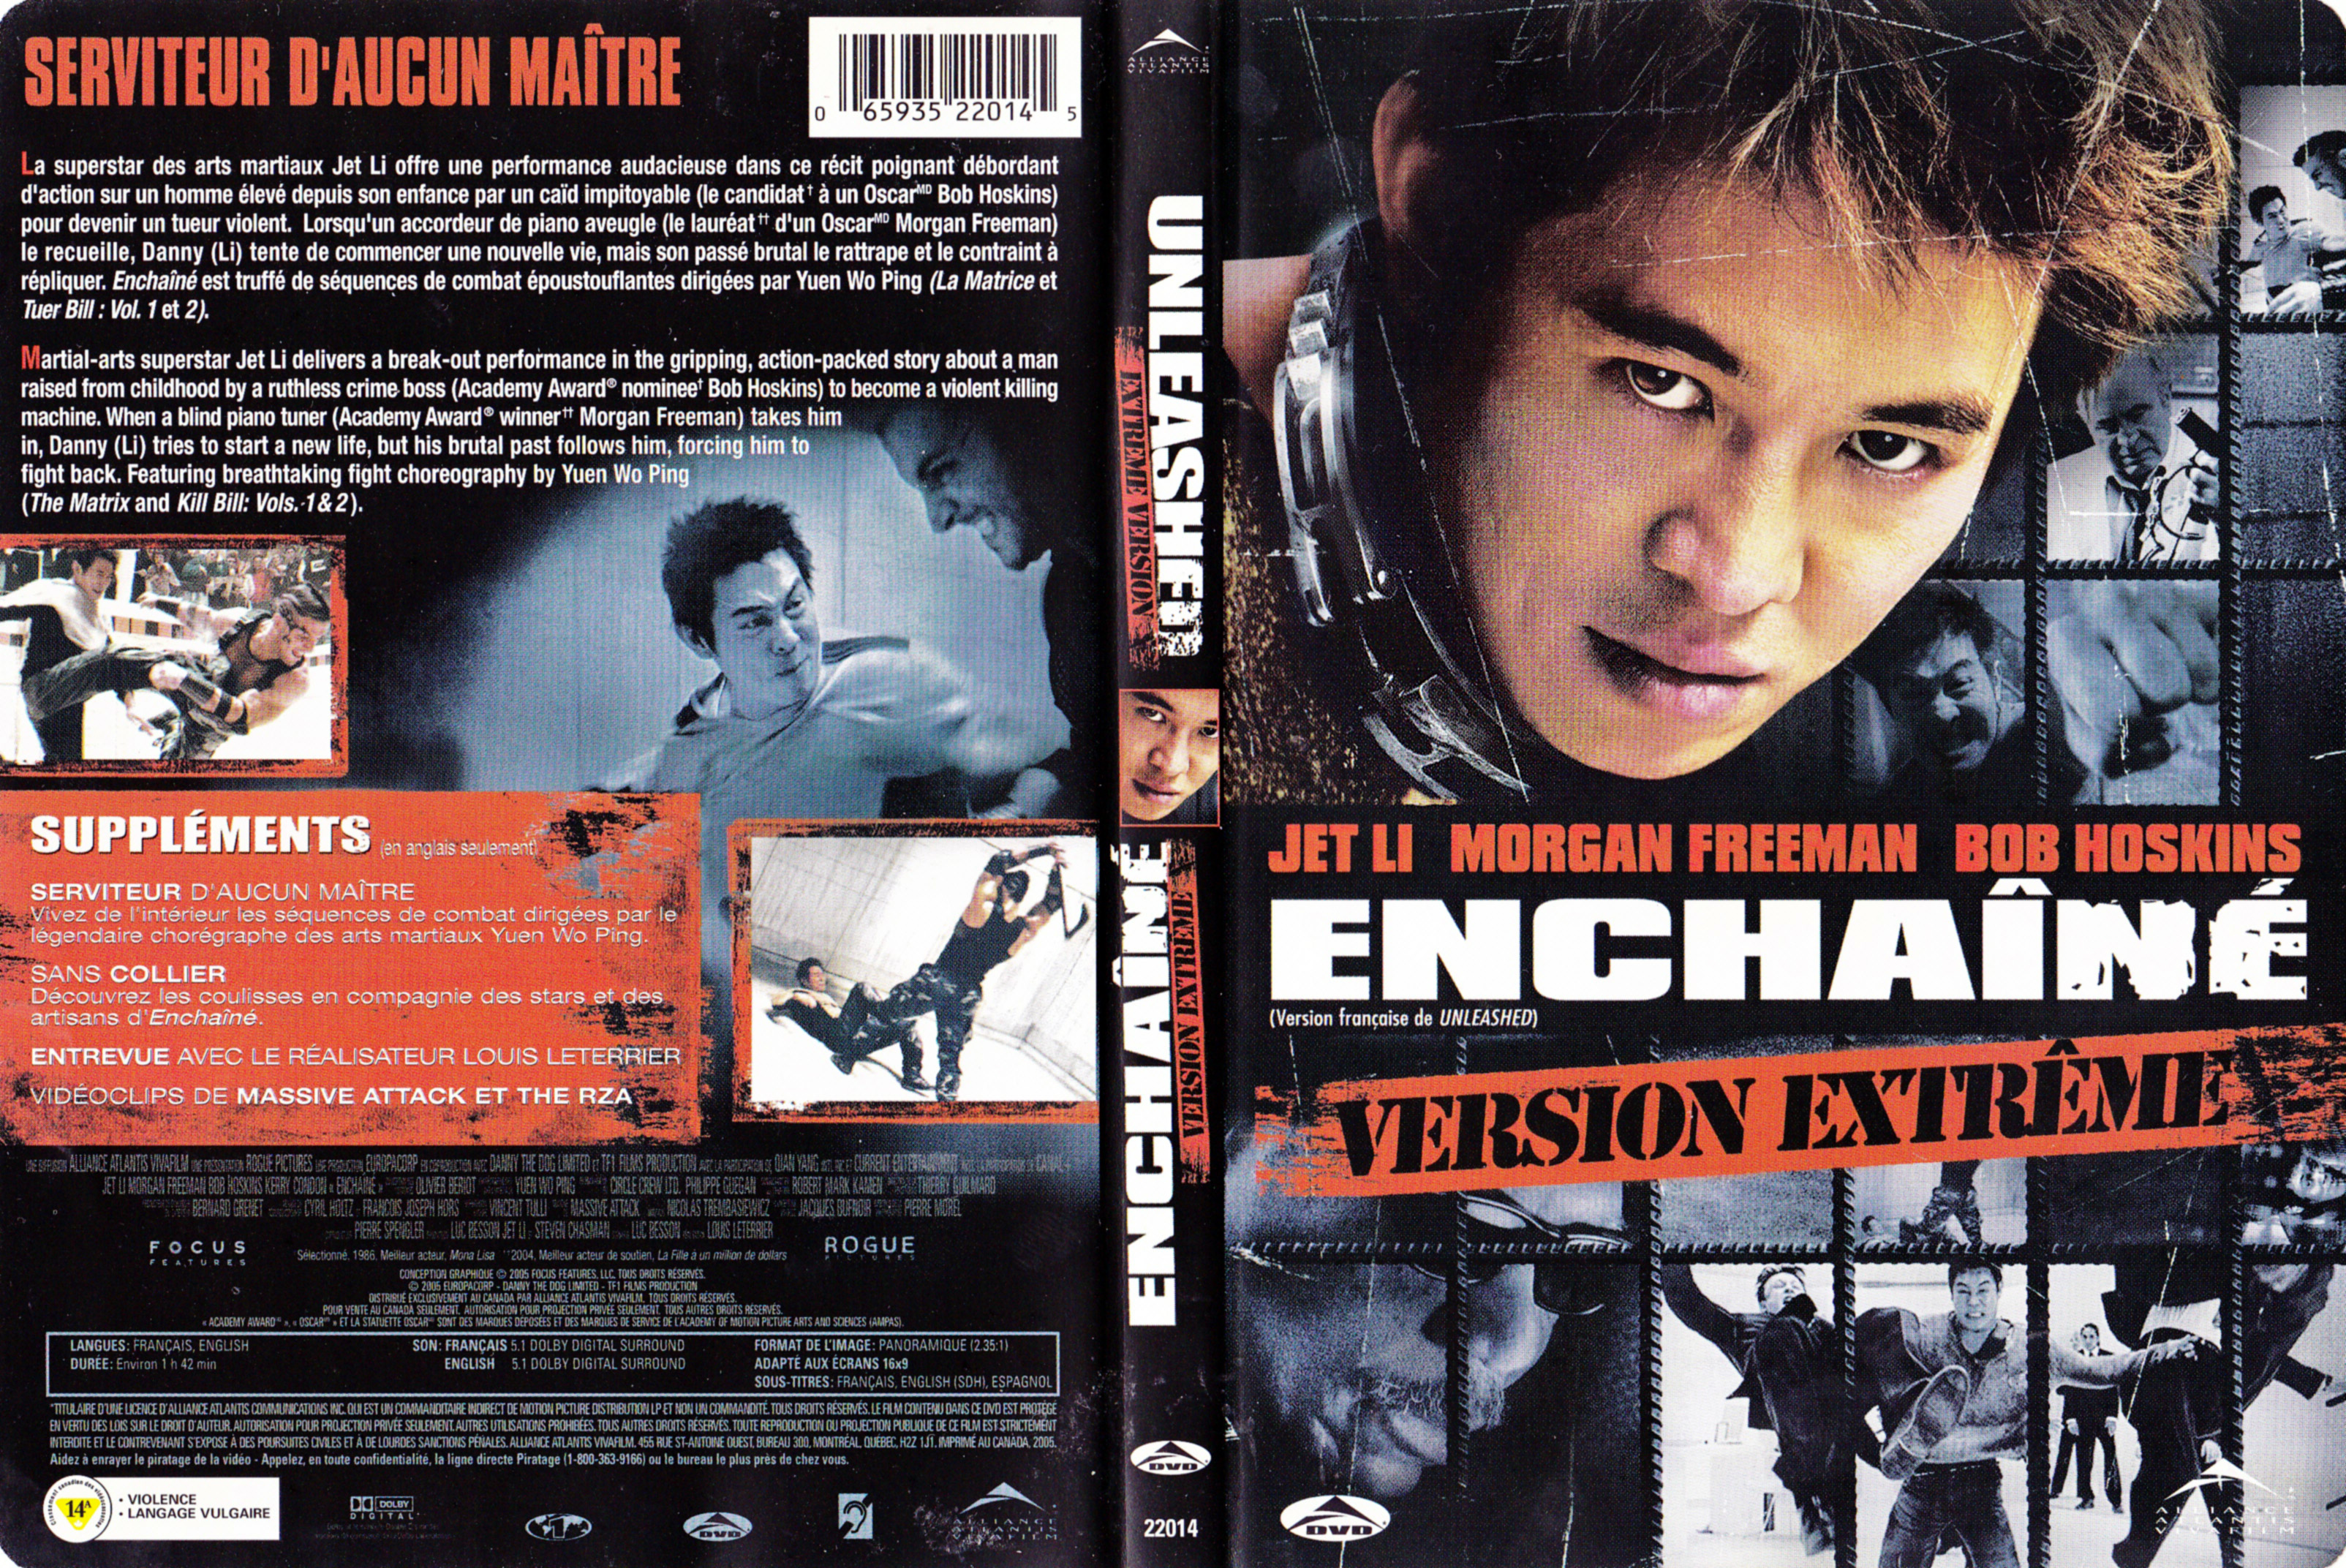 Jaquette DVD Enchain - Unleasher (Canadienne)